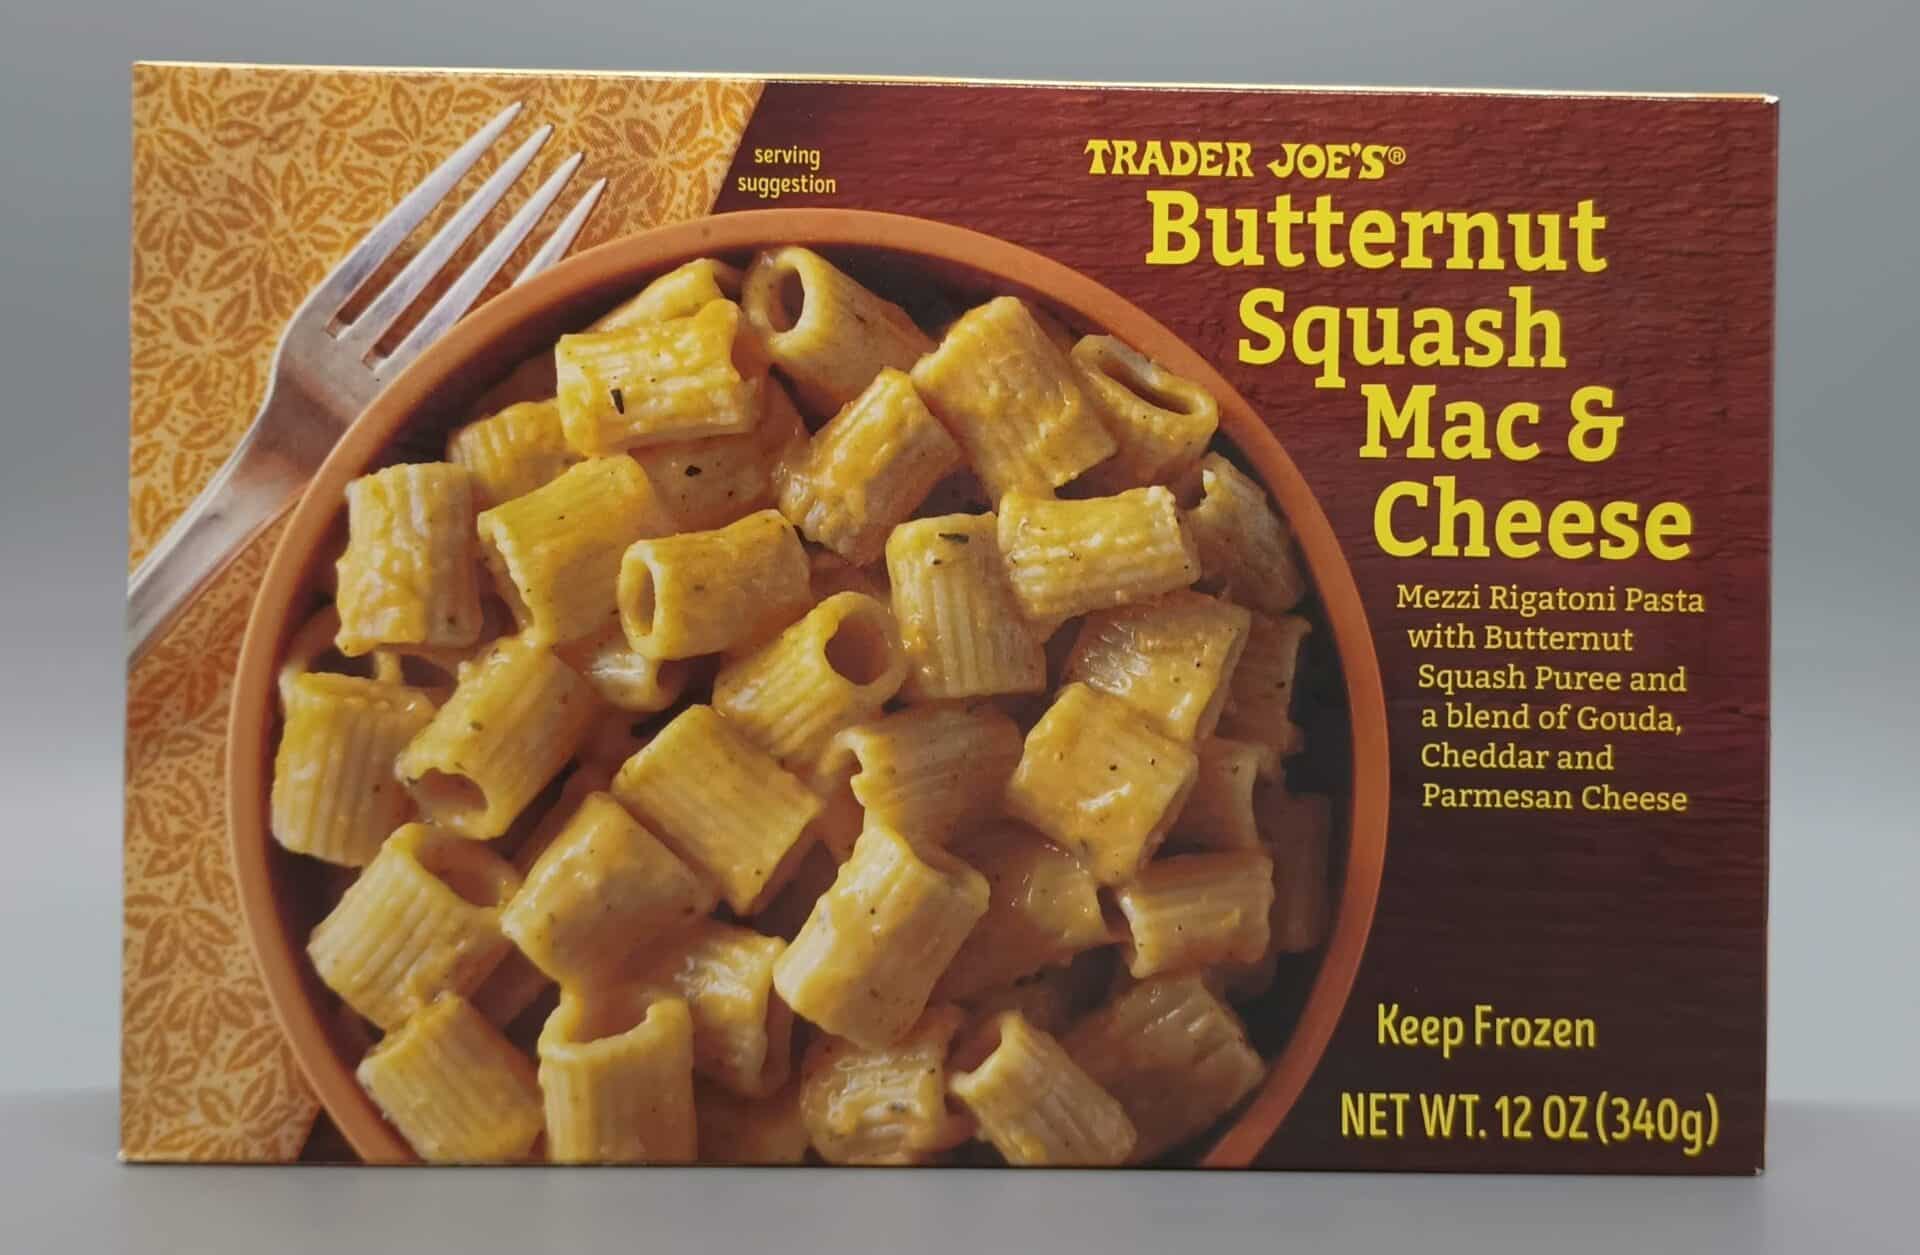 Trader Joe's Butternut Squash Mac & Cheese